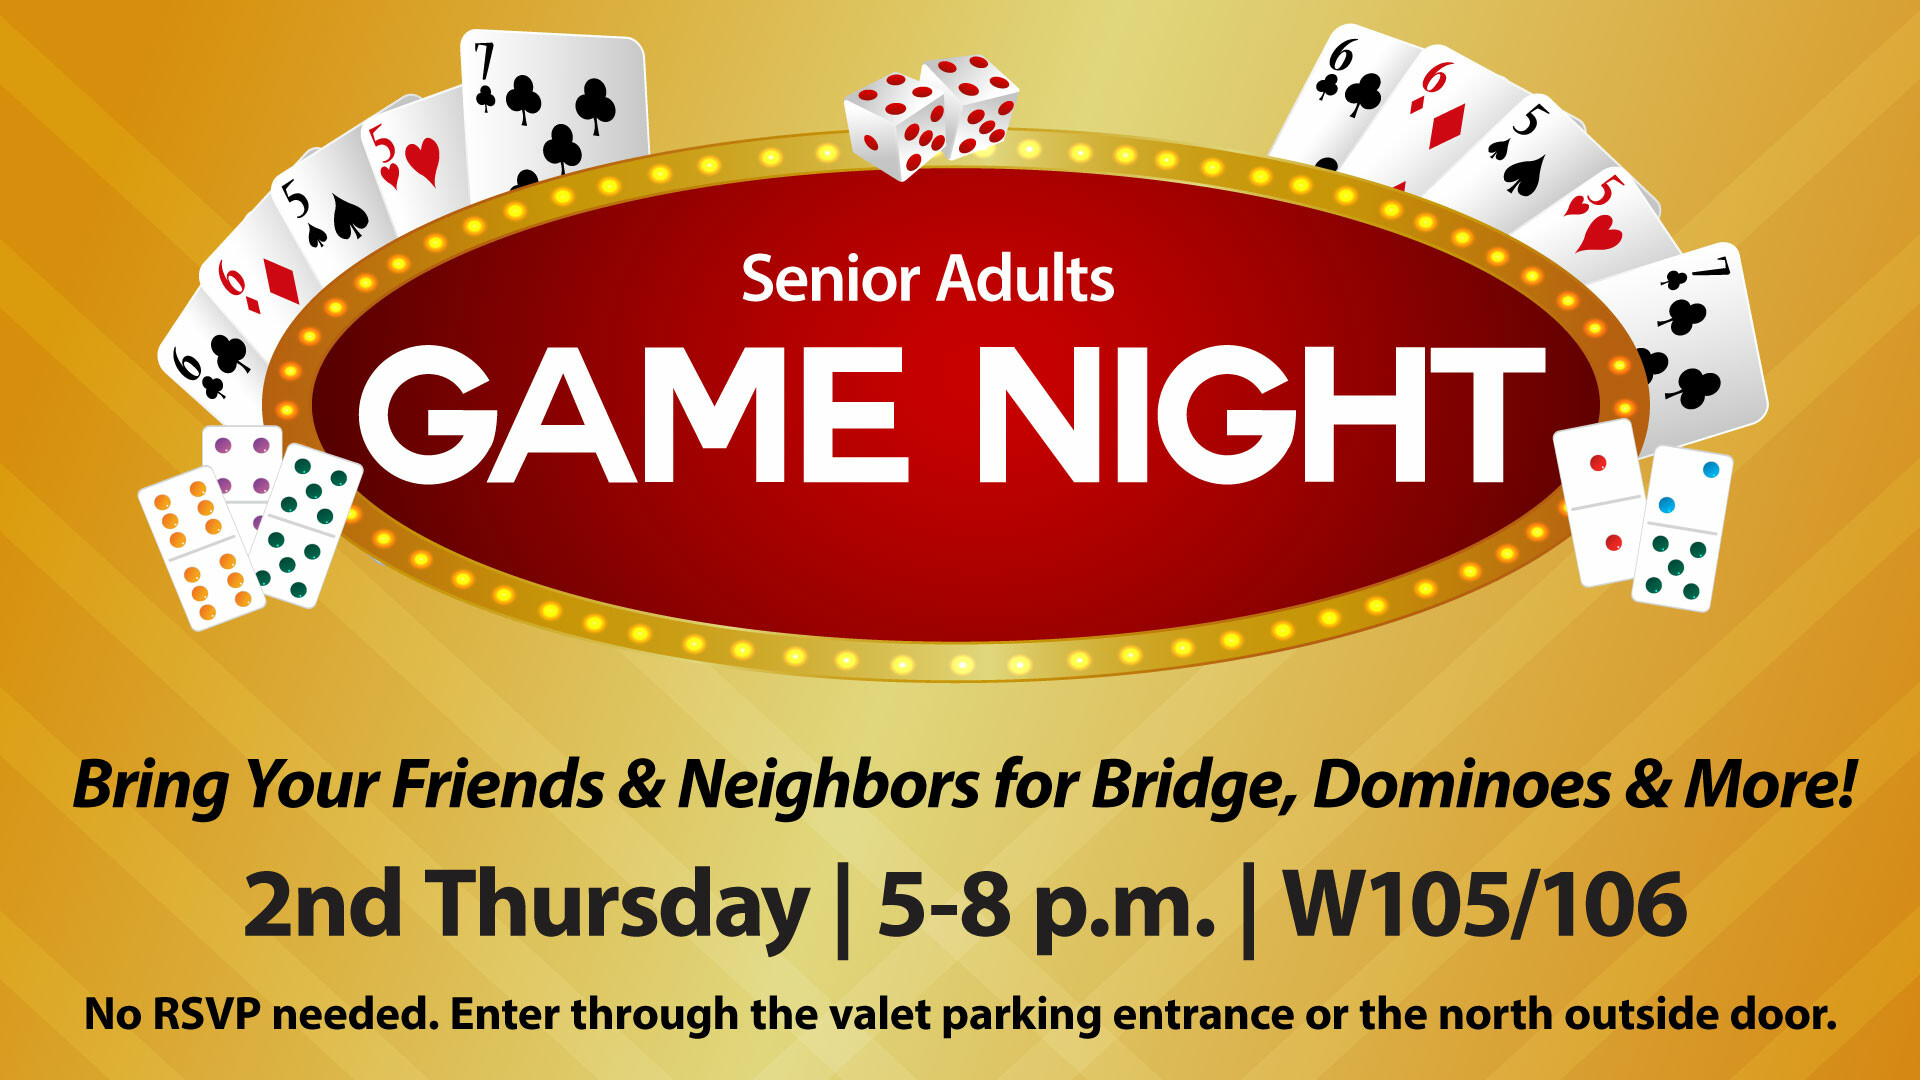 Senior Adult Game Night - W105/106